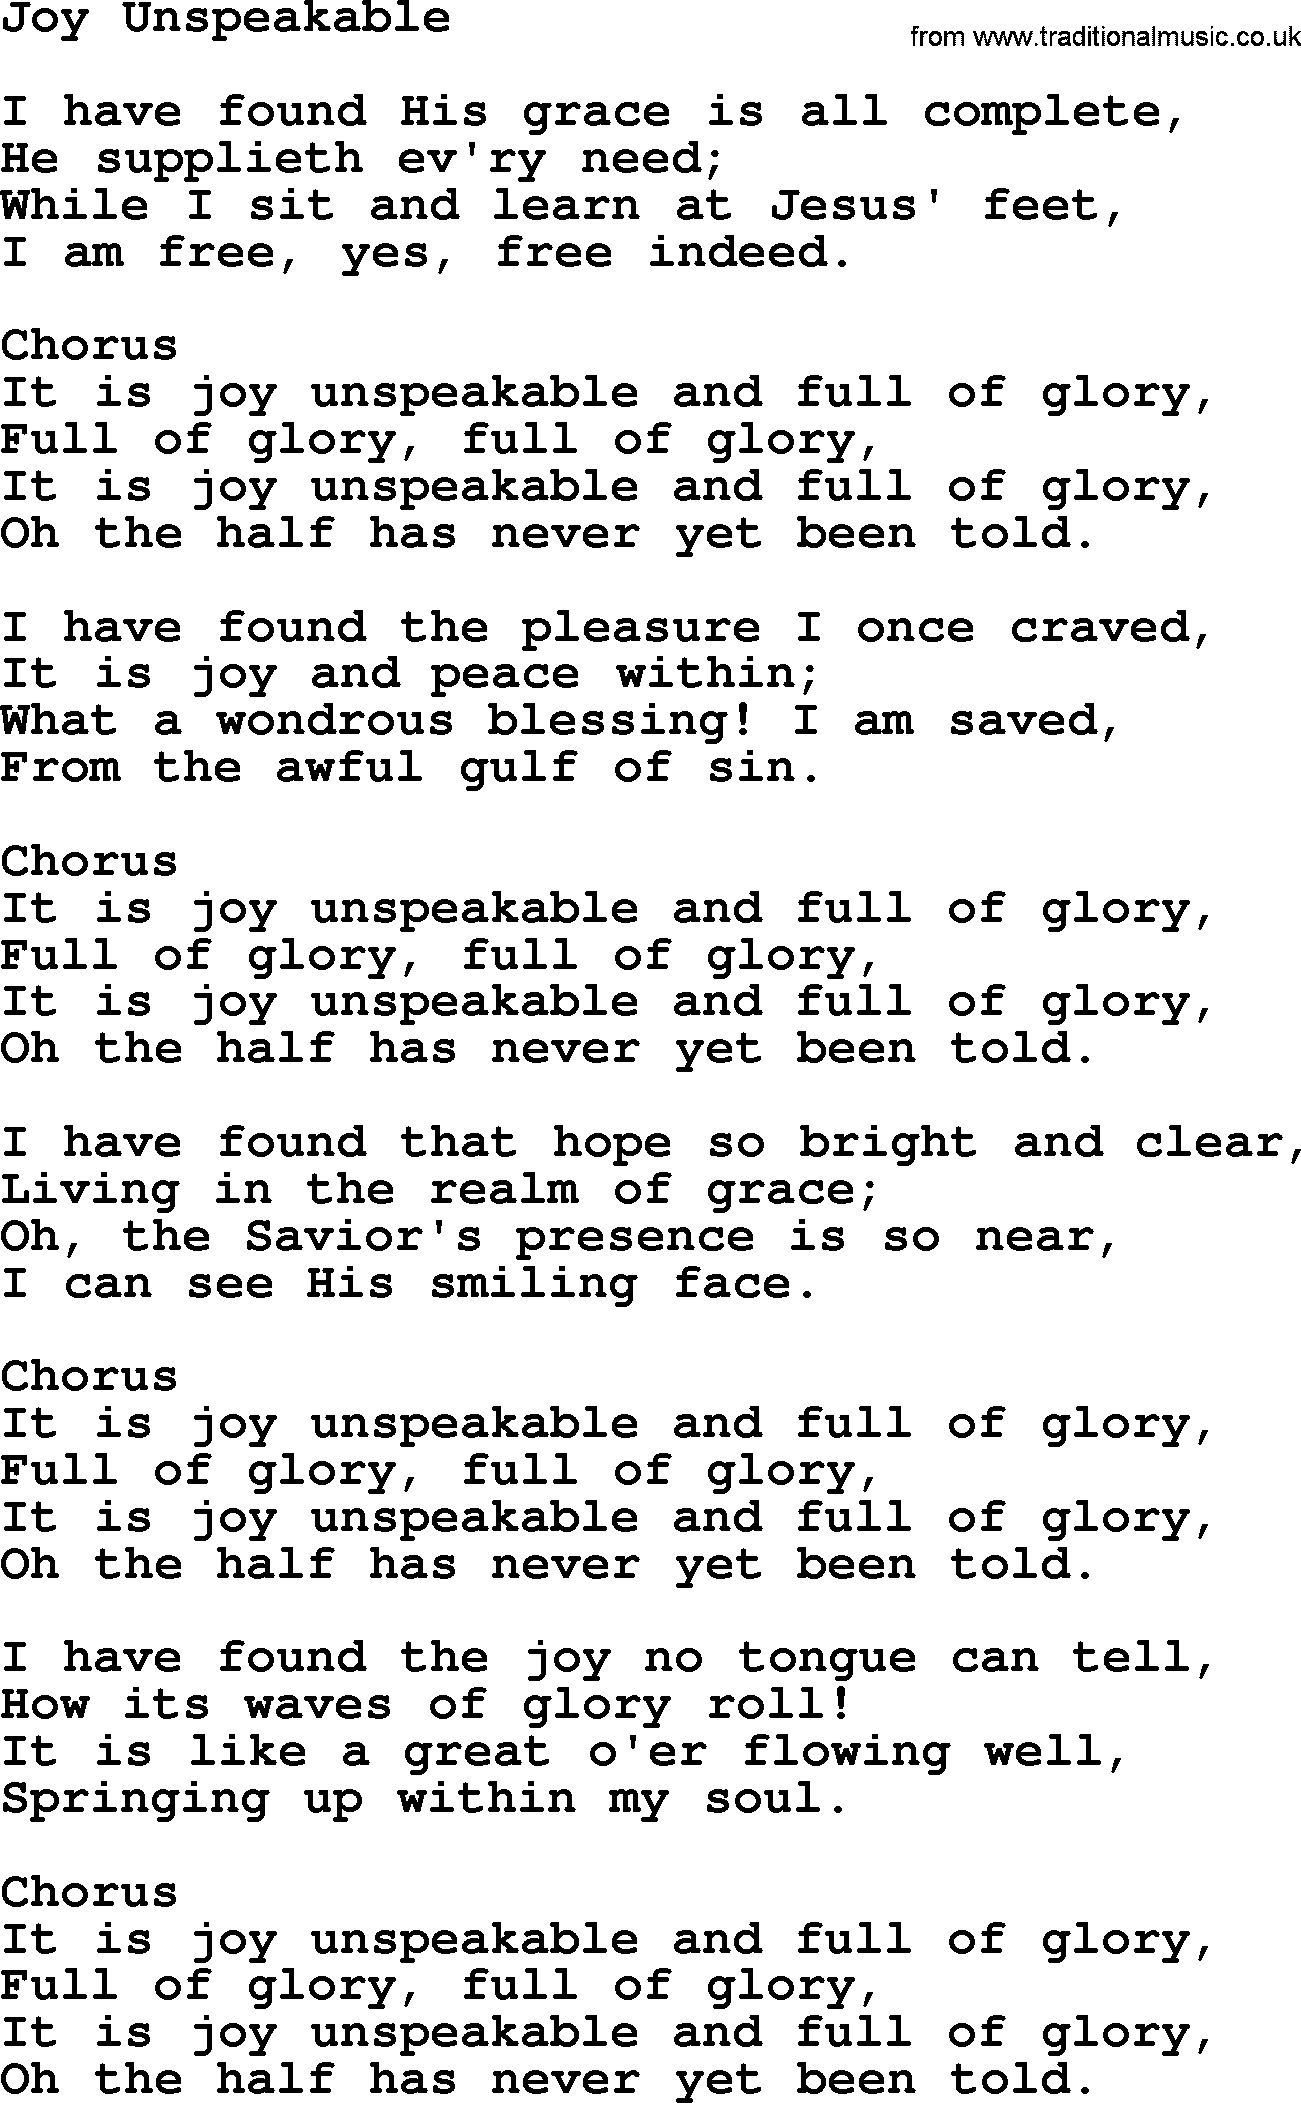 Baptist Hymnal Hymn: Joy Unspeakable, lyrics with pdf